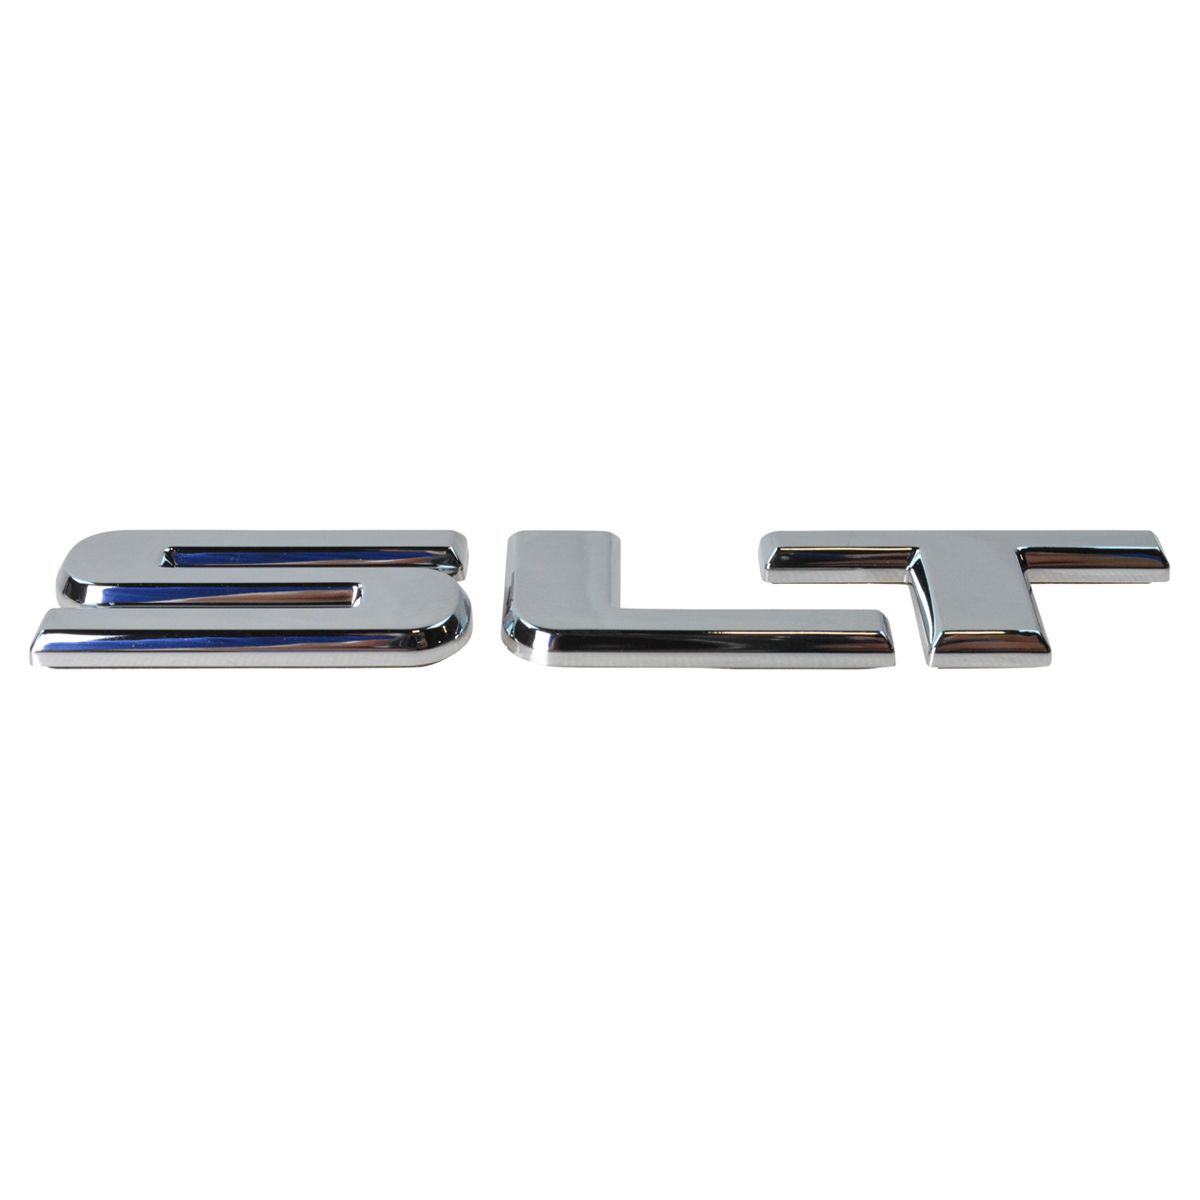 OEM SLT Nameplate Emblem LH or RH Side Rear C Pillar Tailgate Chrome for GMC | eBay